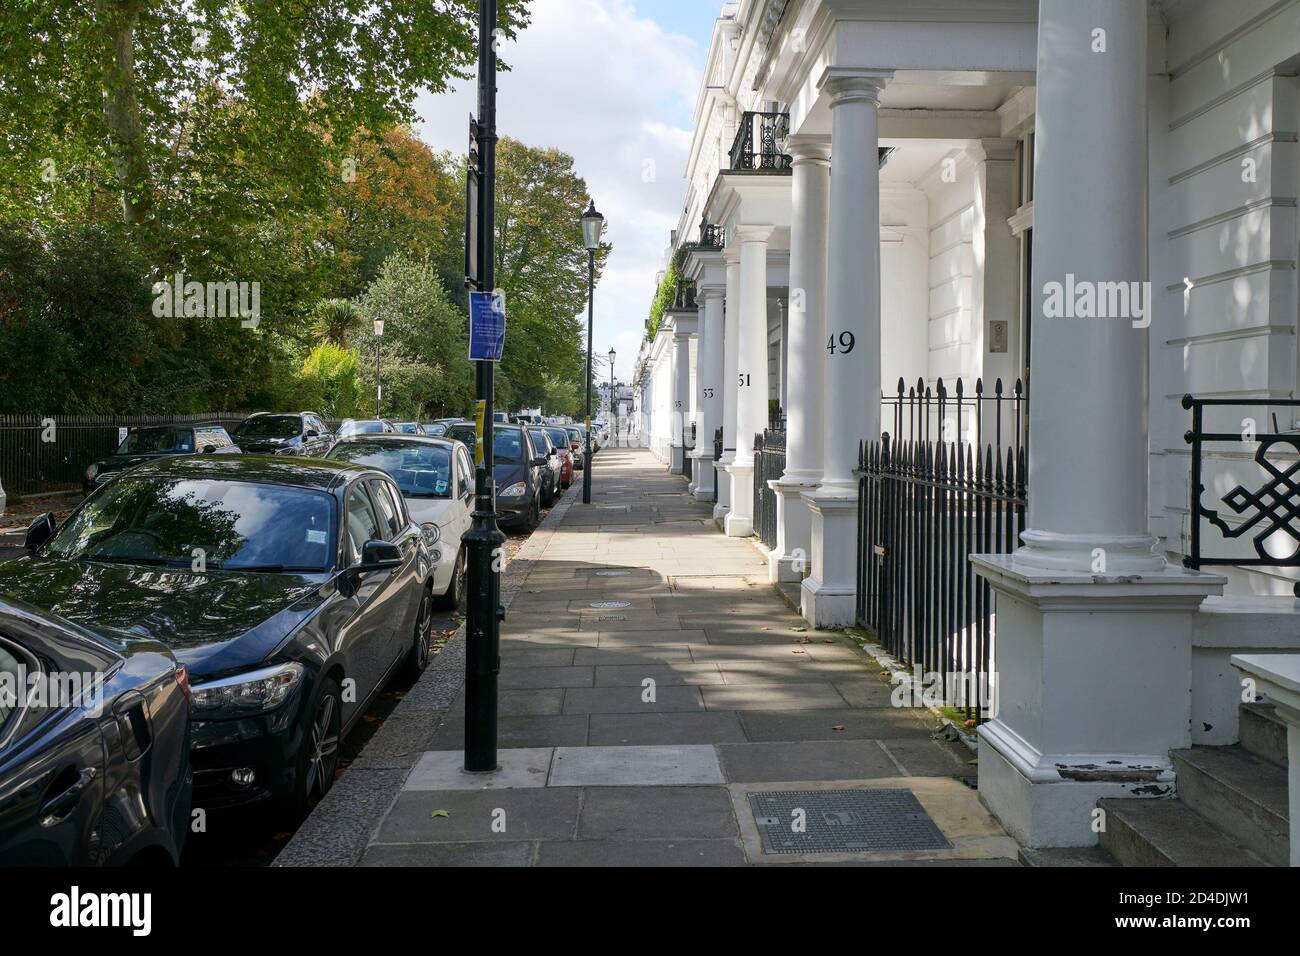 Street scene, Onslow Square, South Kensington, West London, UK Stock Photo